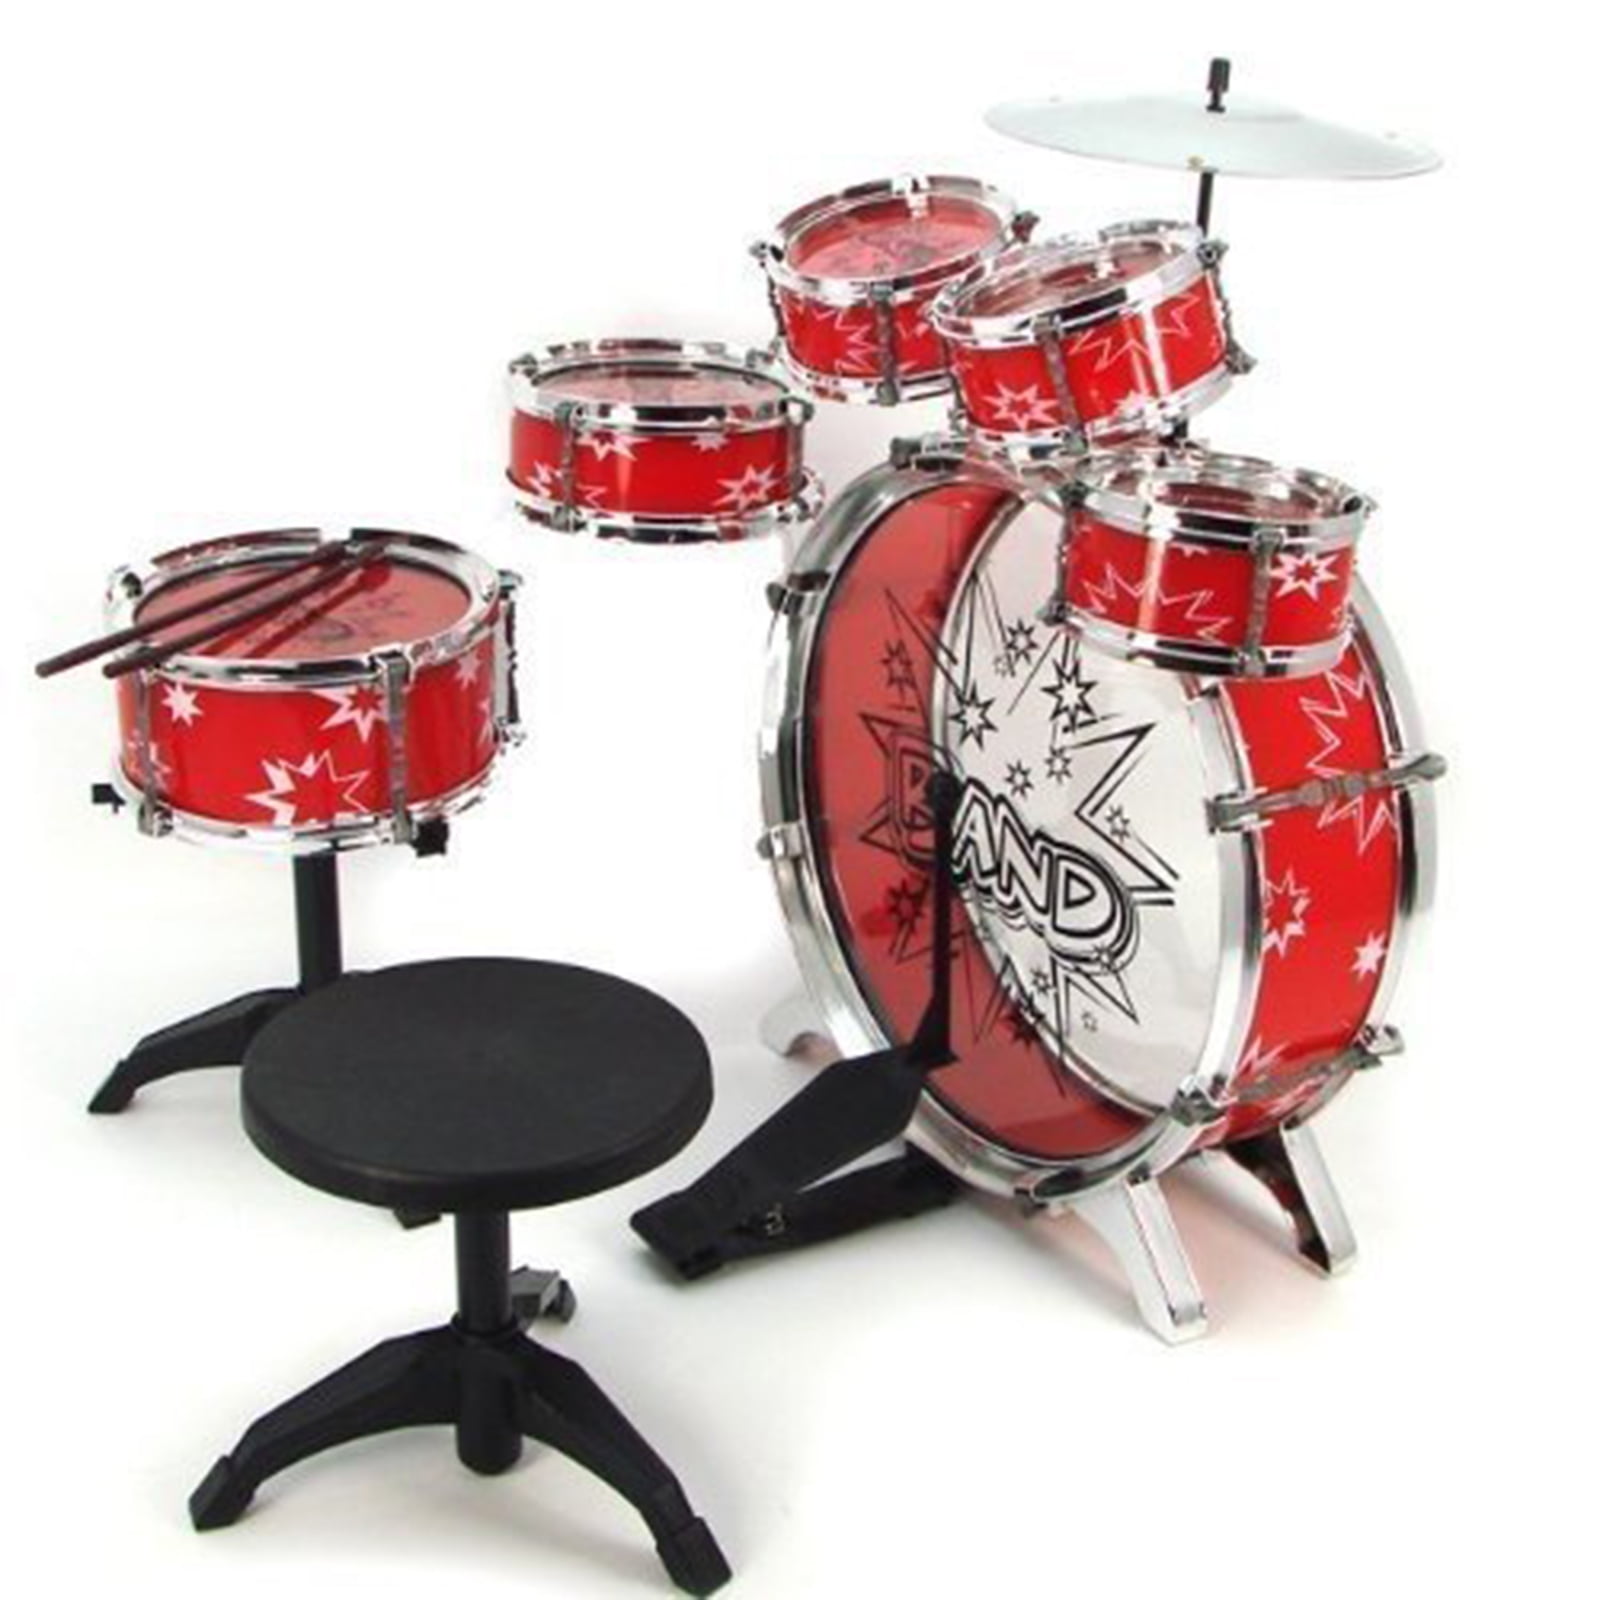 Details about   Livebest Kids Jazz Drum Set Kit Kick Pedal Drumsticks Stool Children Gift Toy 